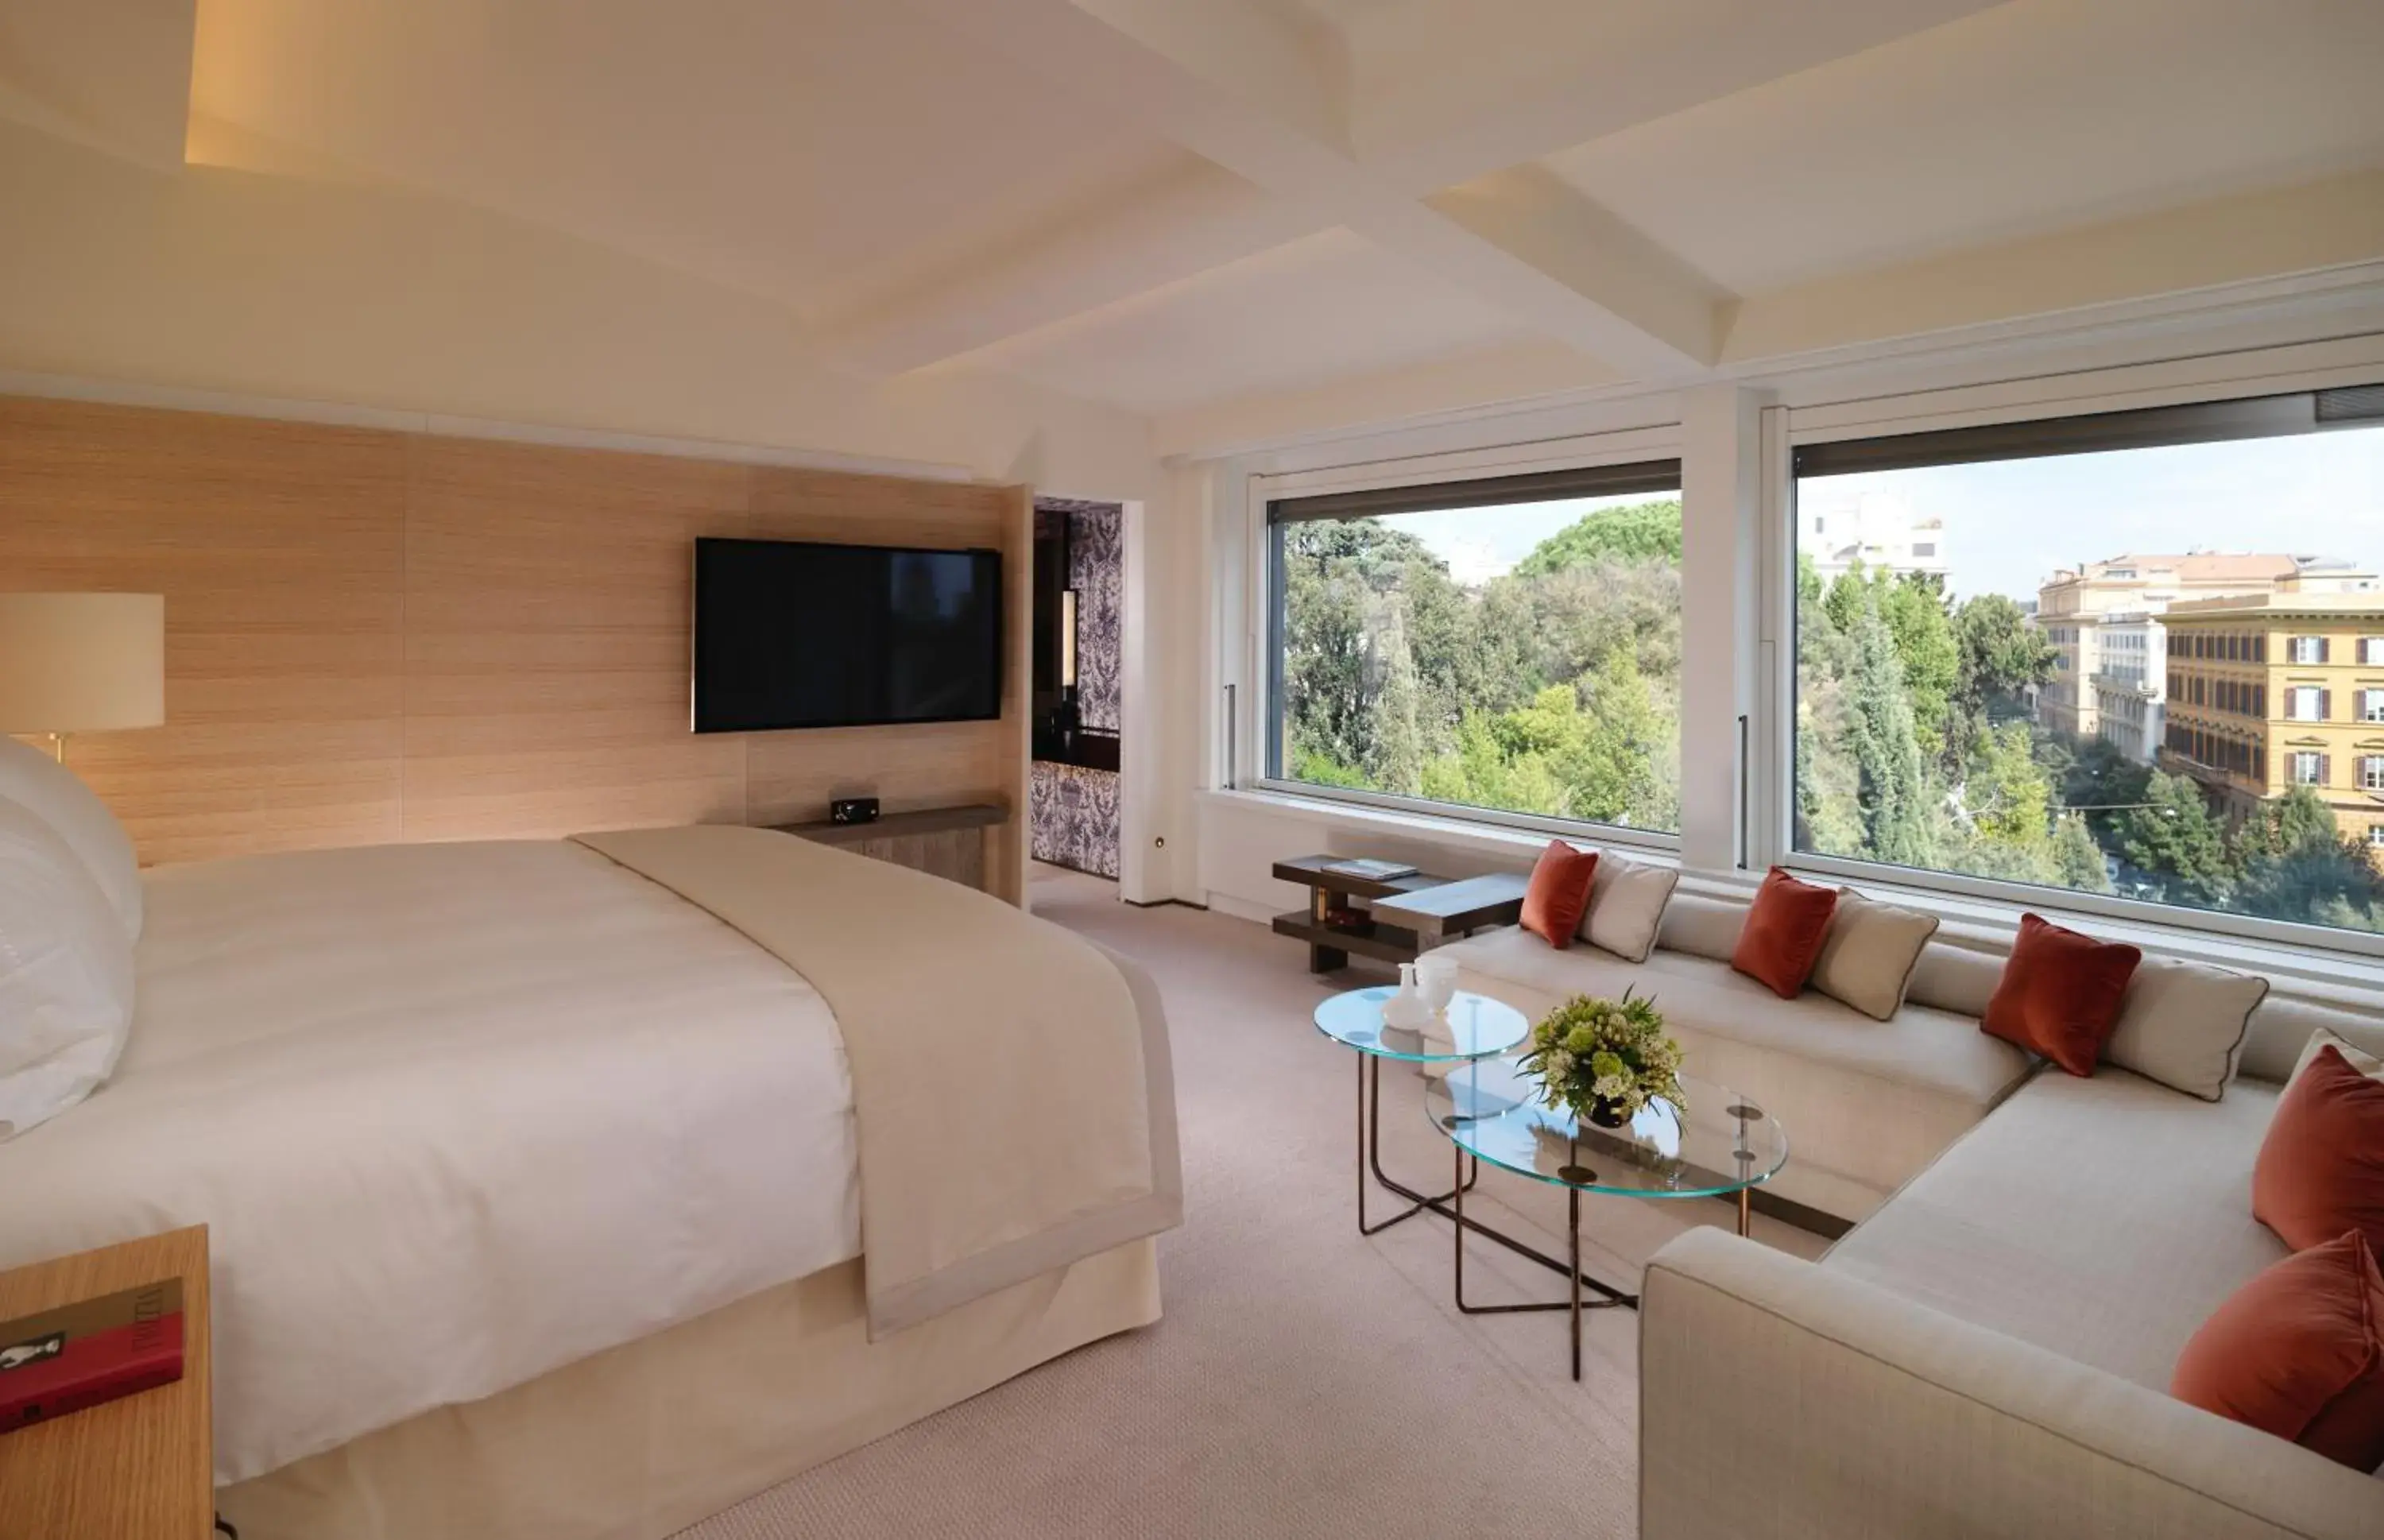 Bedroom in Hotel Eden - Dorchester Collection